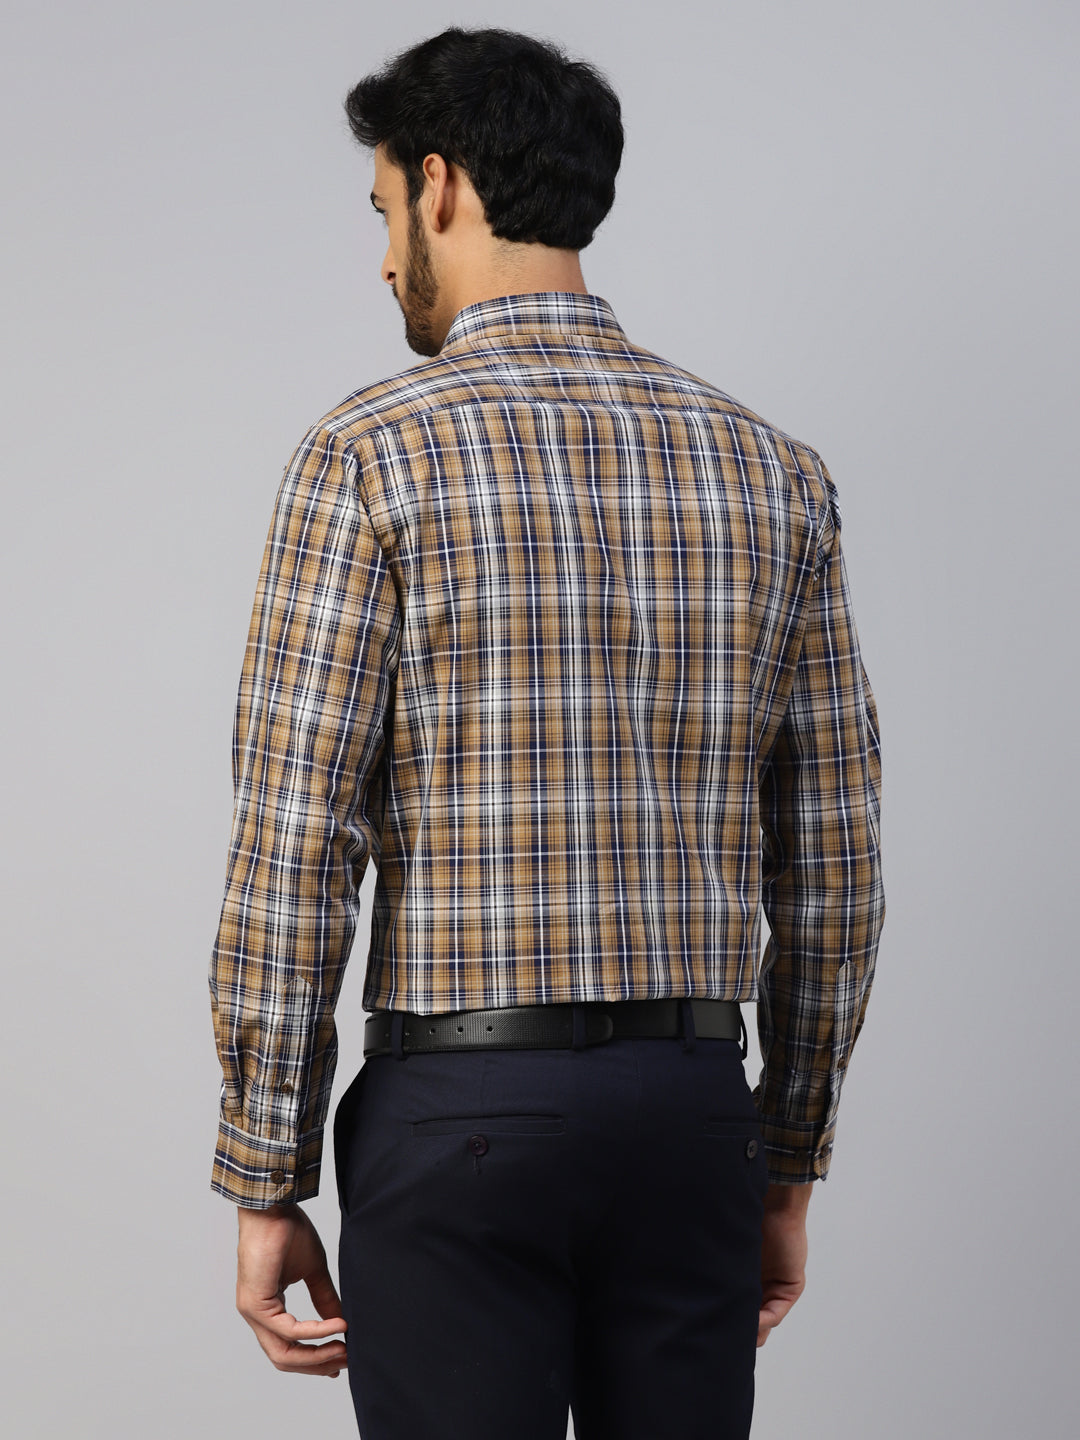 Men's Multi-colored Checks Slim Fit Shirt